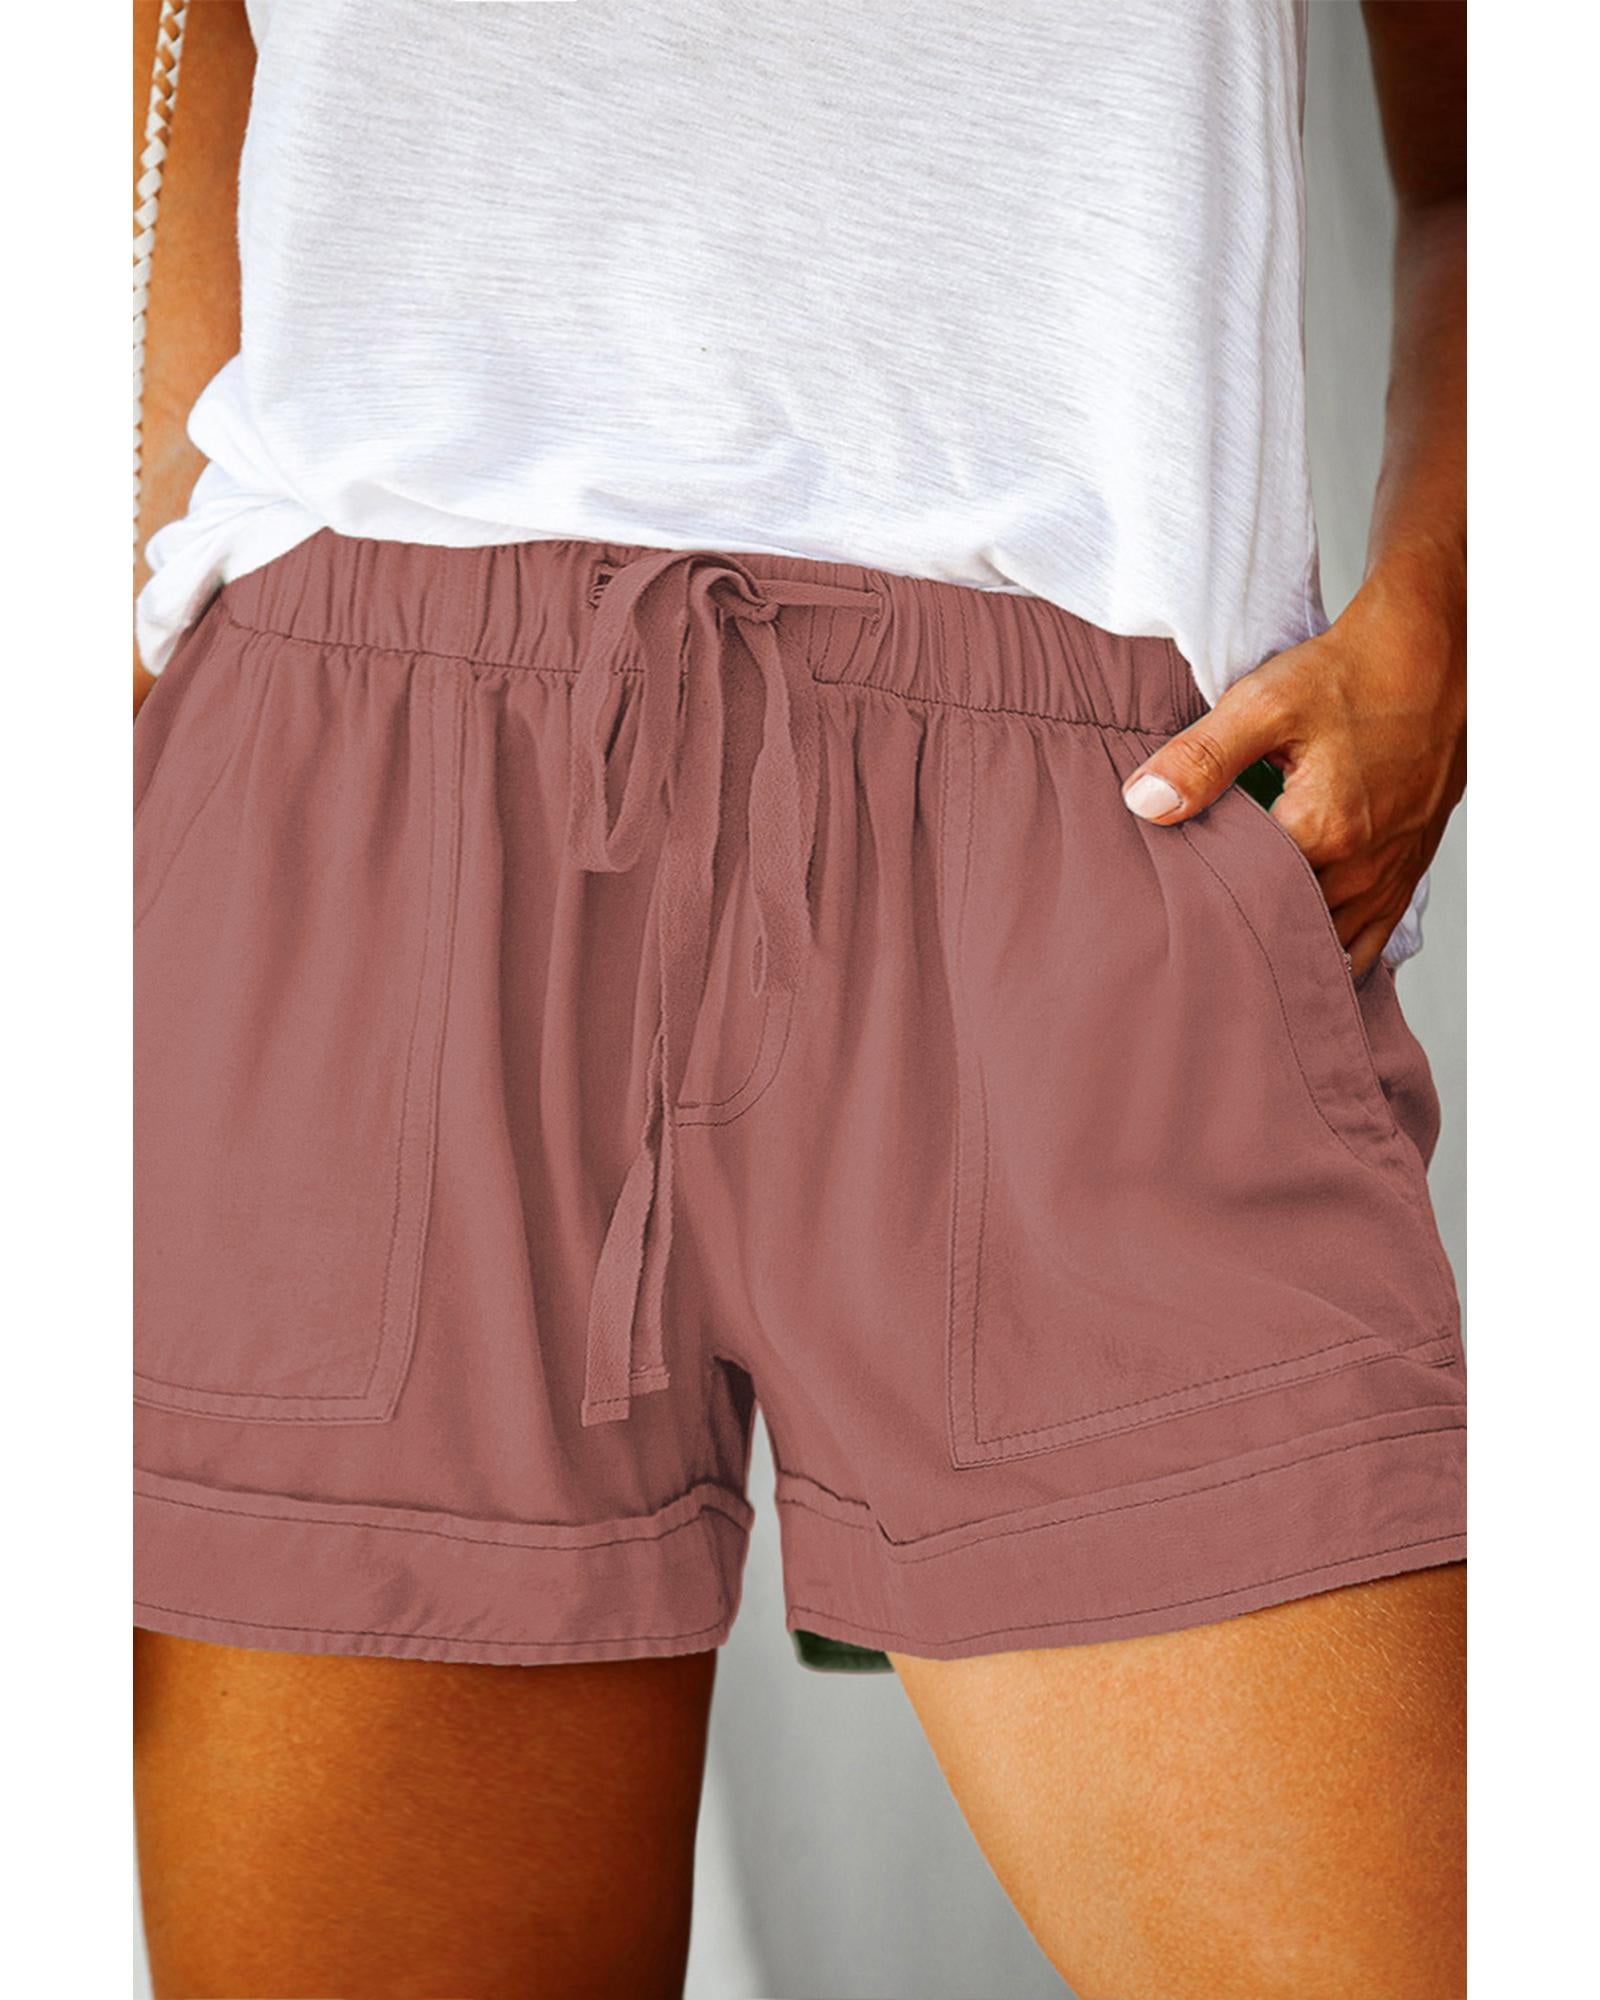 Elastic Waist Drawstring Pocket Shorts - 5X